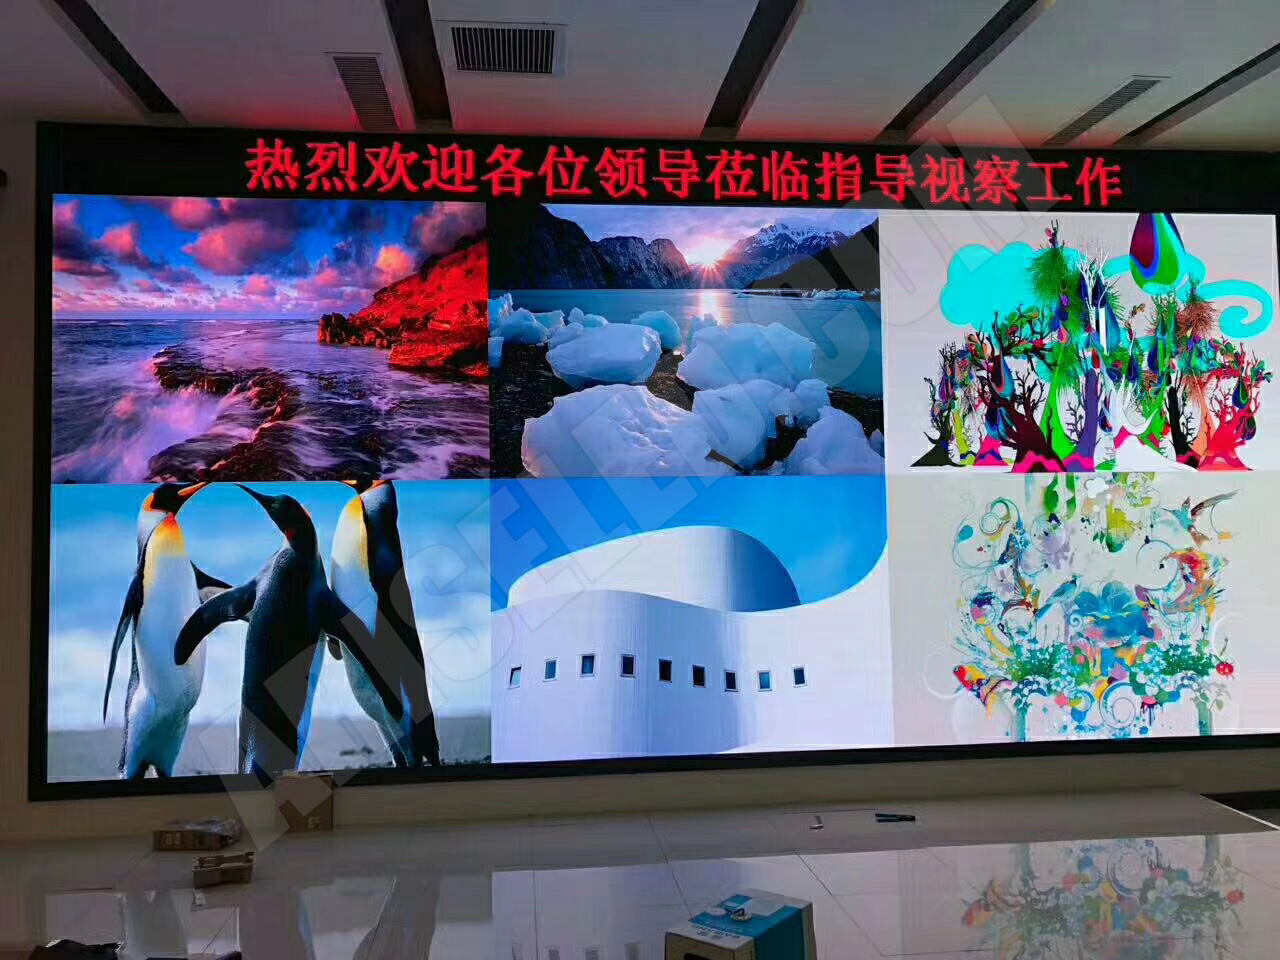 46sqm P2.5mm LED Display for QingDao Government